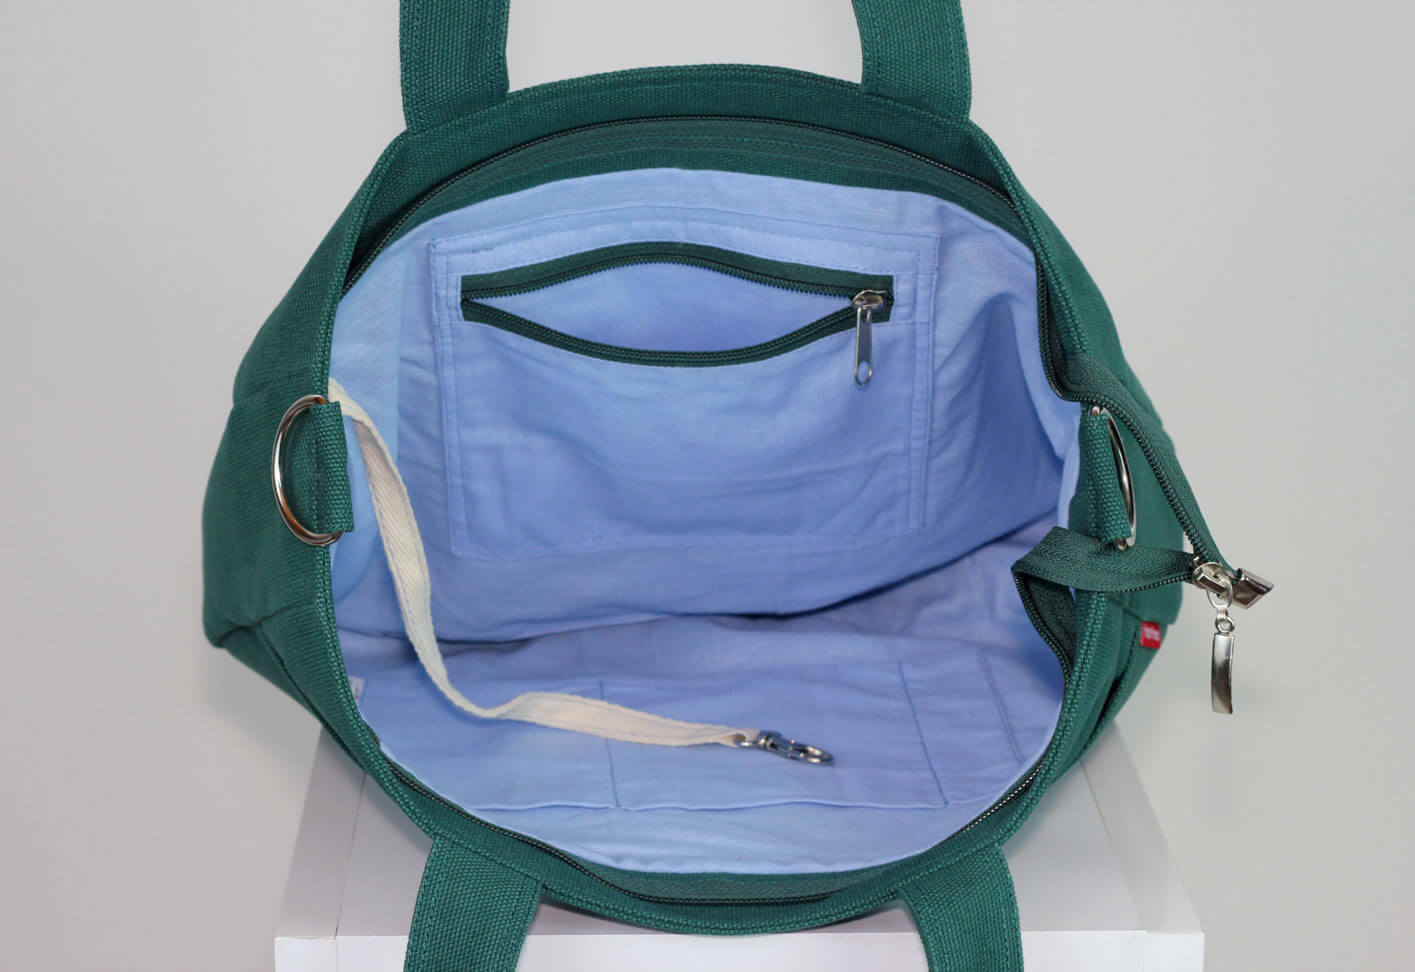 BadPiggies Canvas Handbag Tote Shoulder Bag for Women Casual School Purse  Hobo Bag Rucksack Convertible Backpack (Blue) 